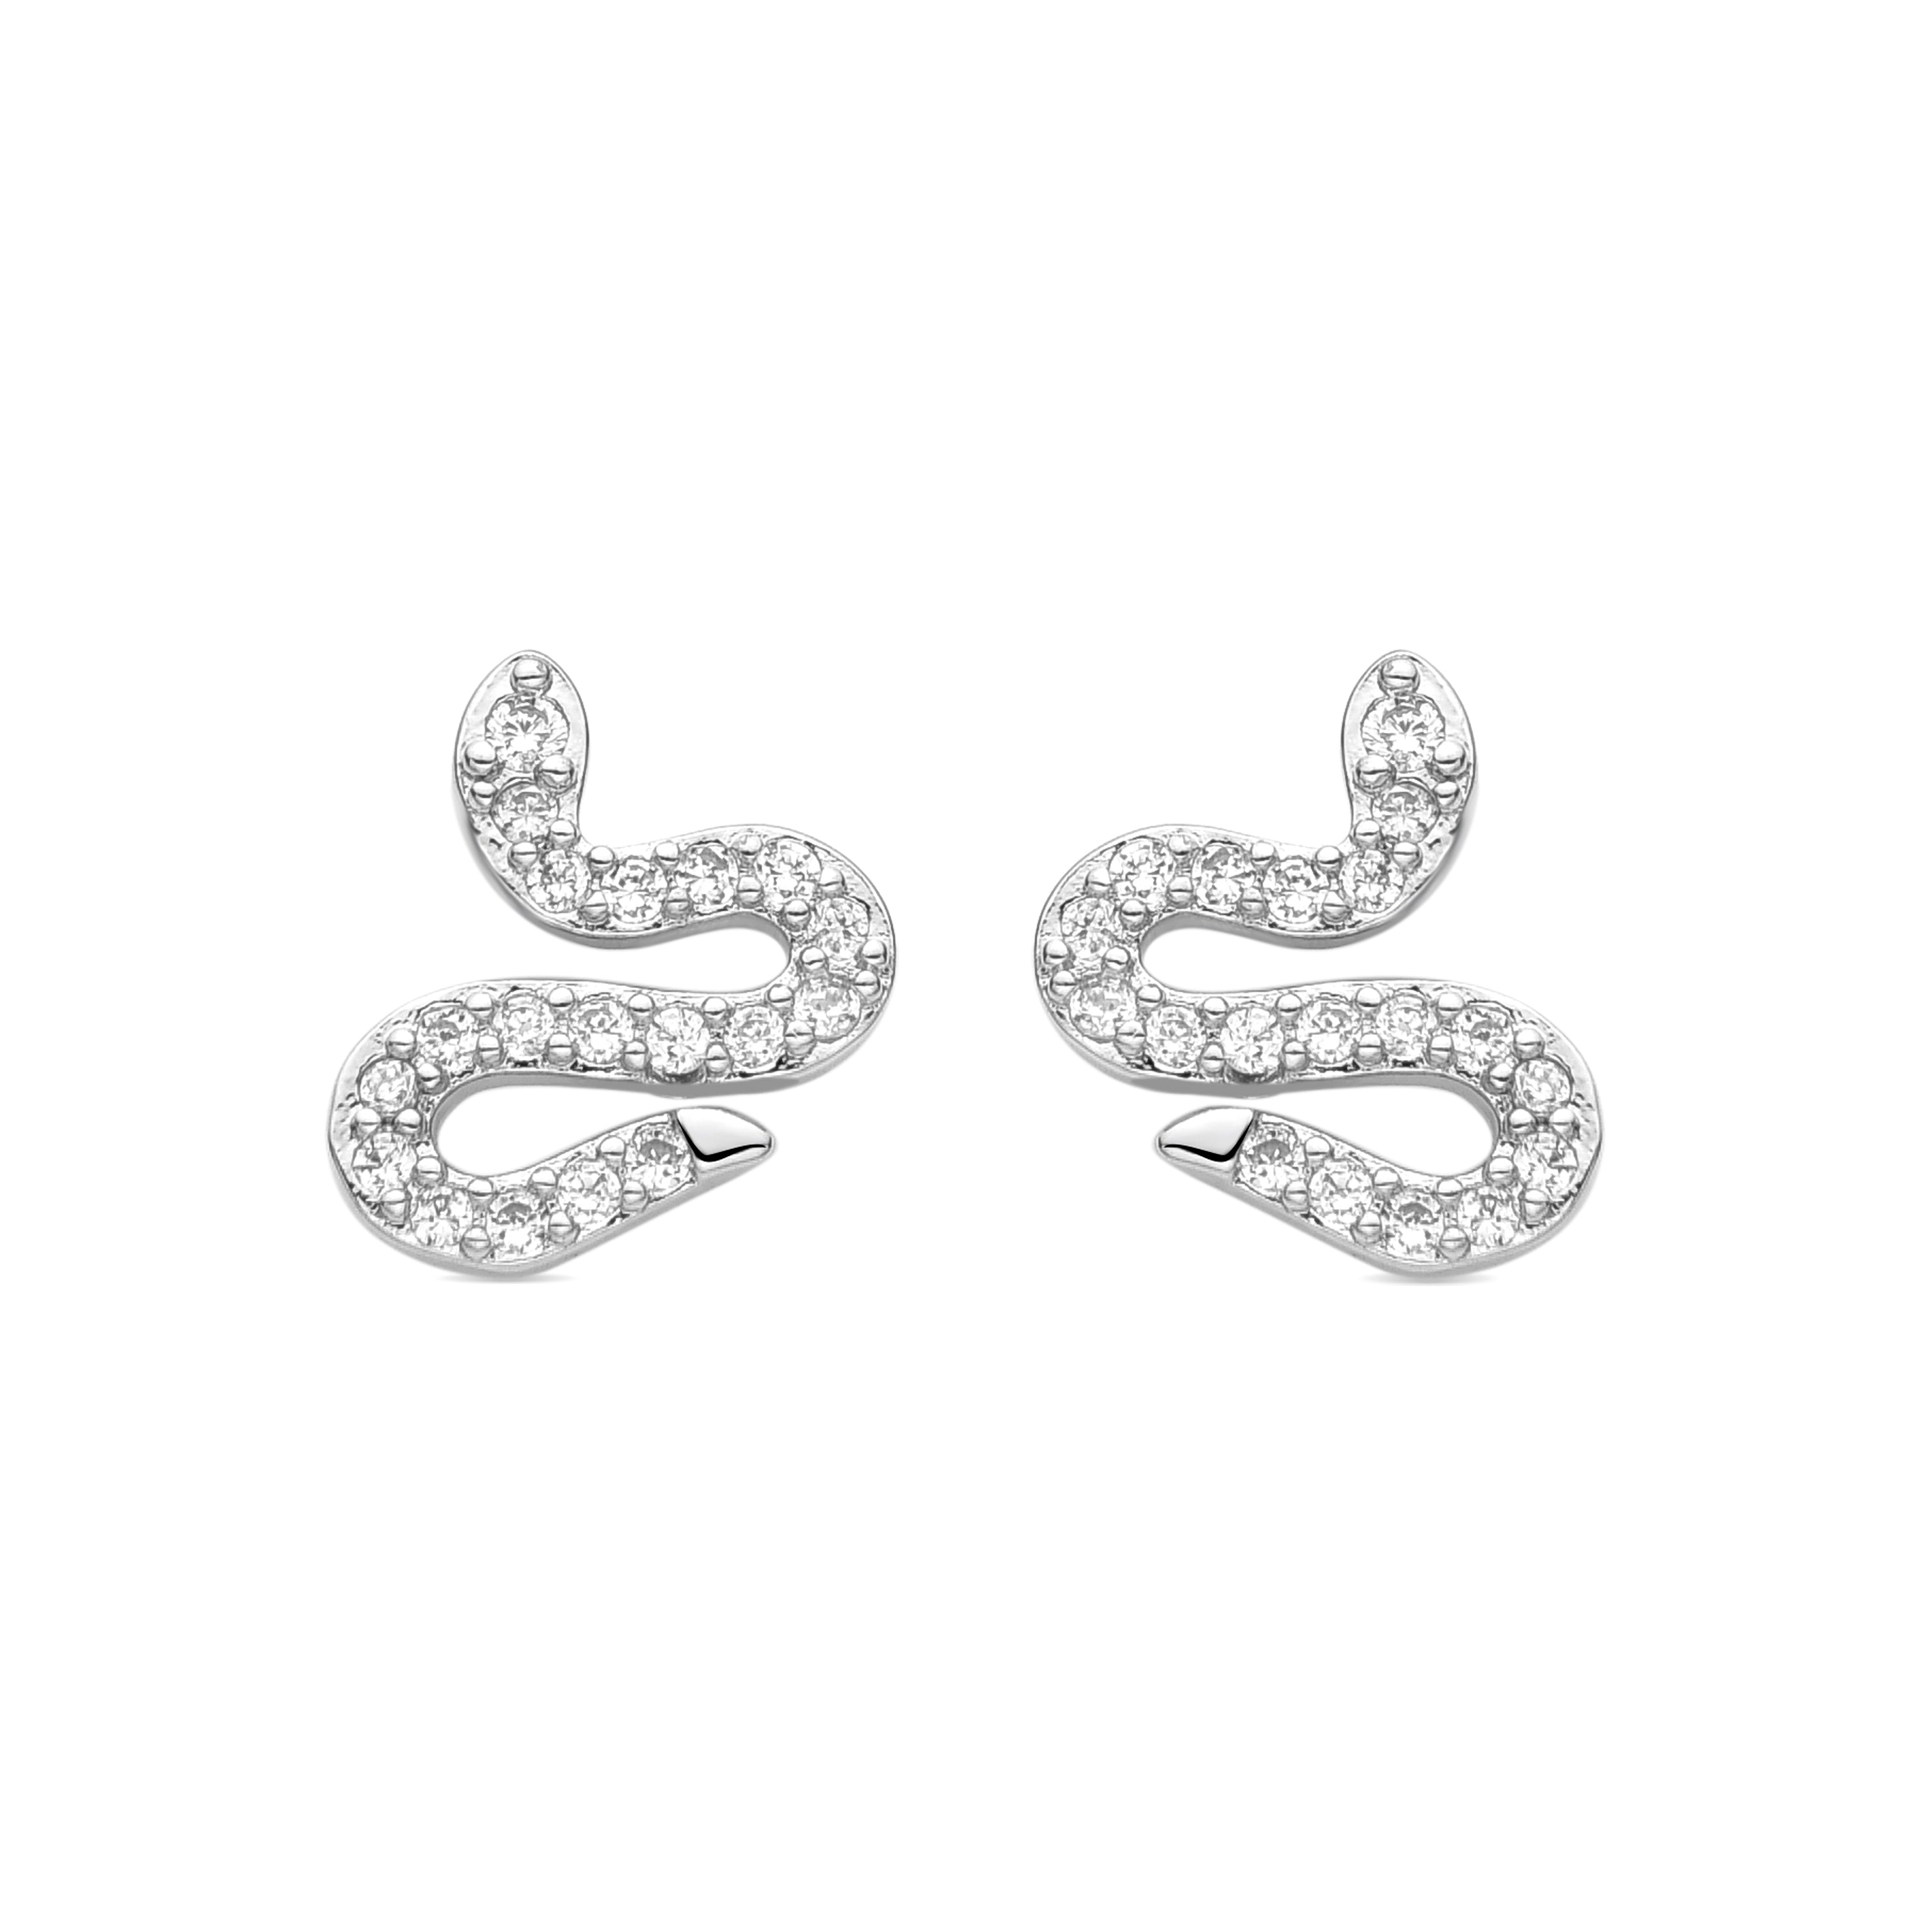 Disri silver finish earrings